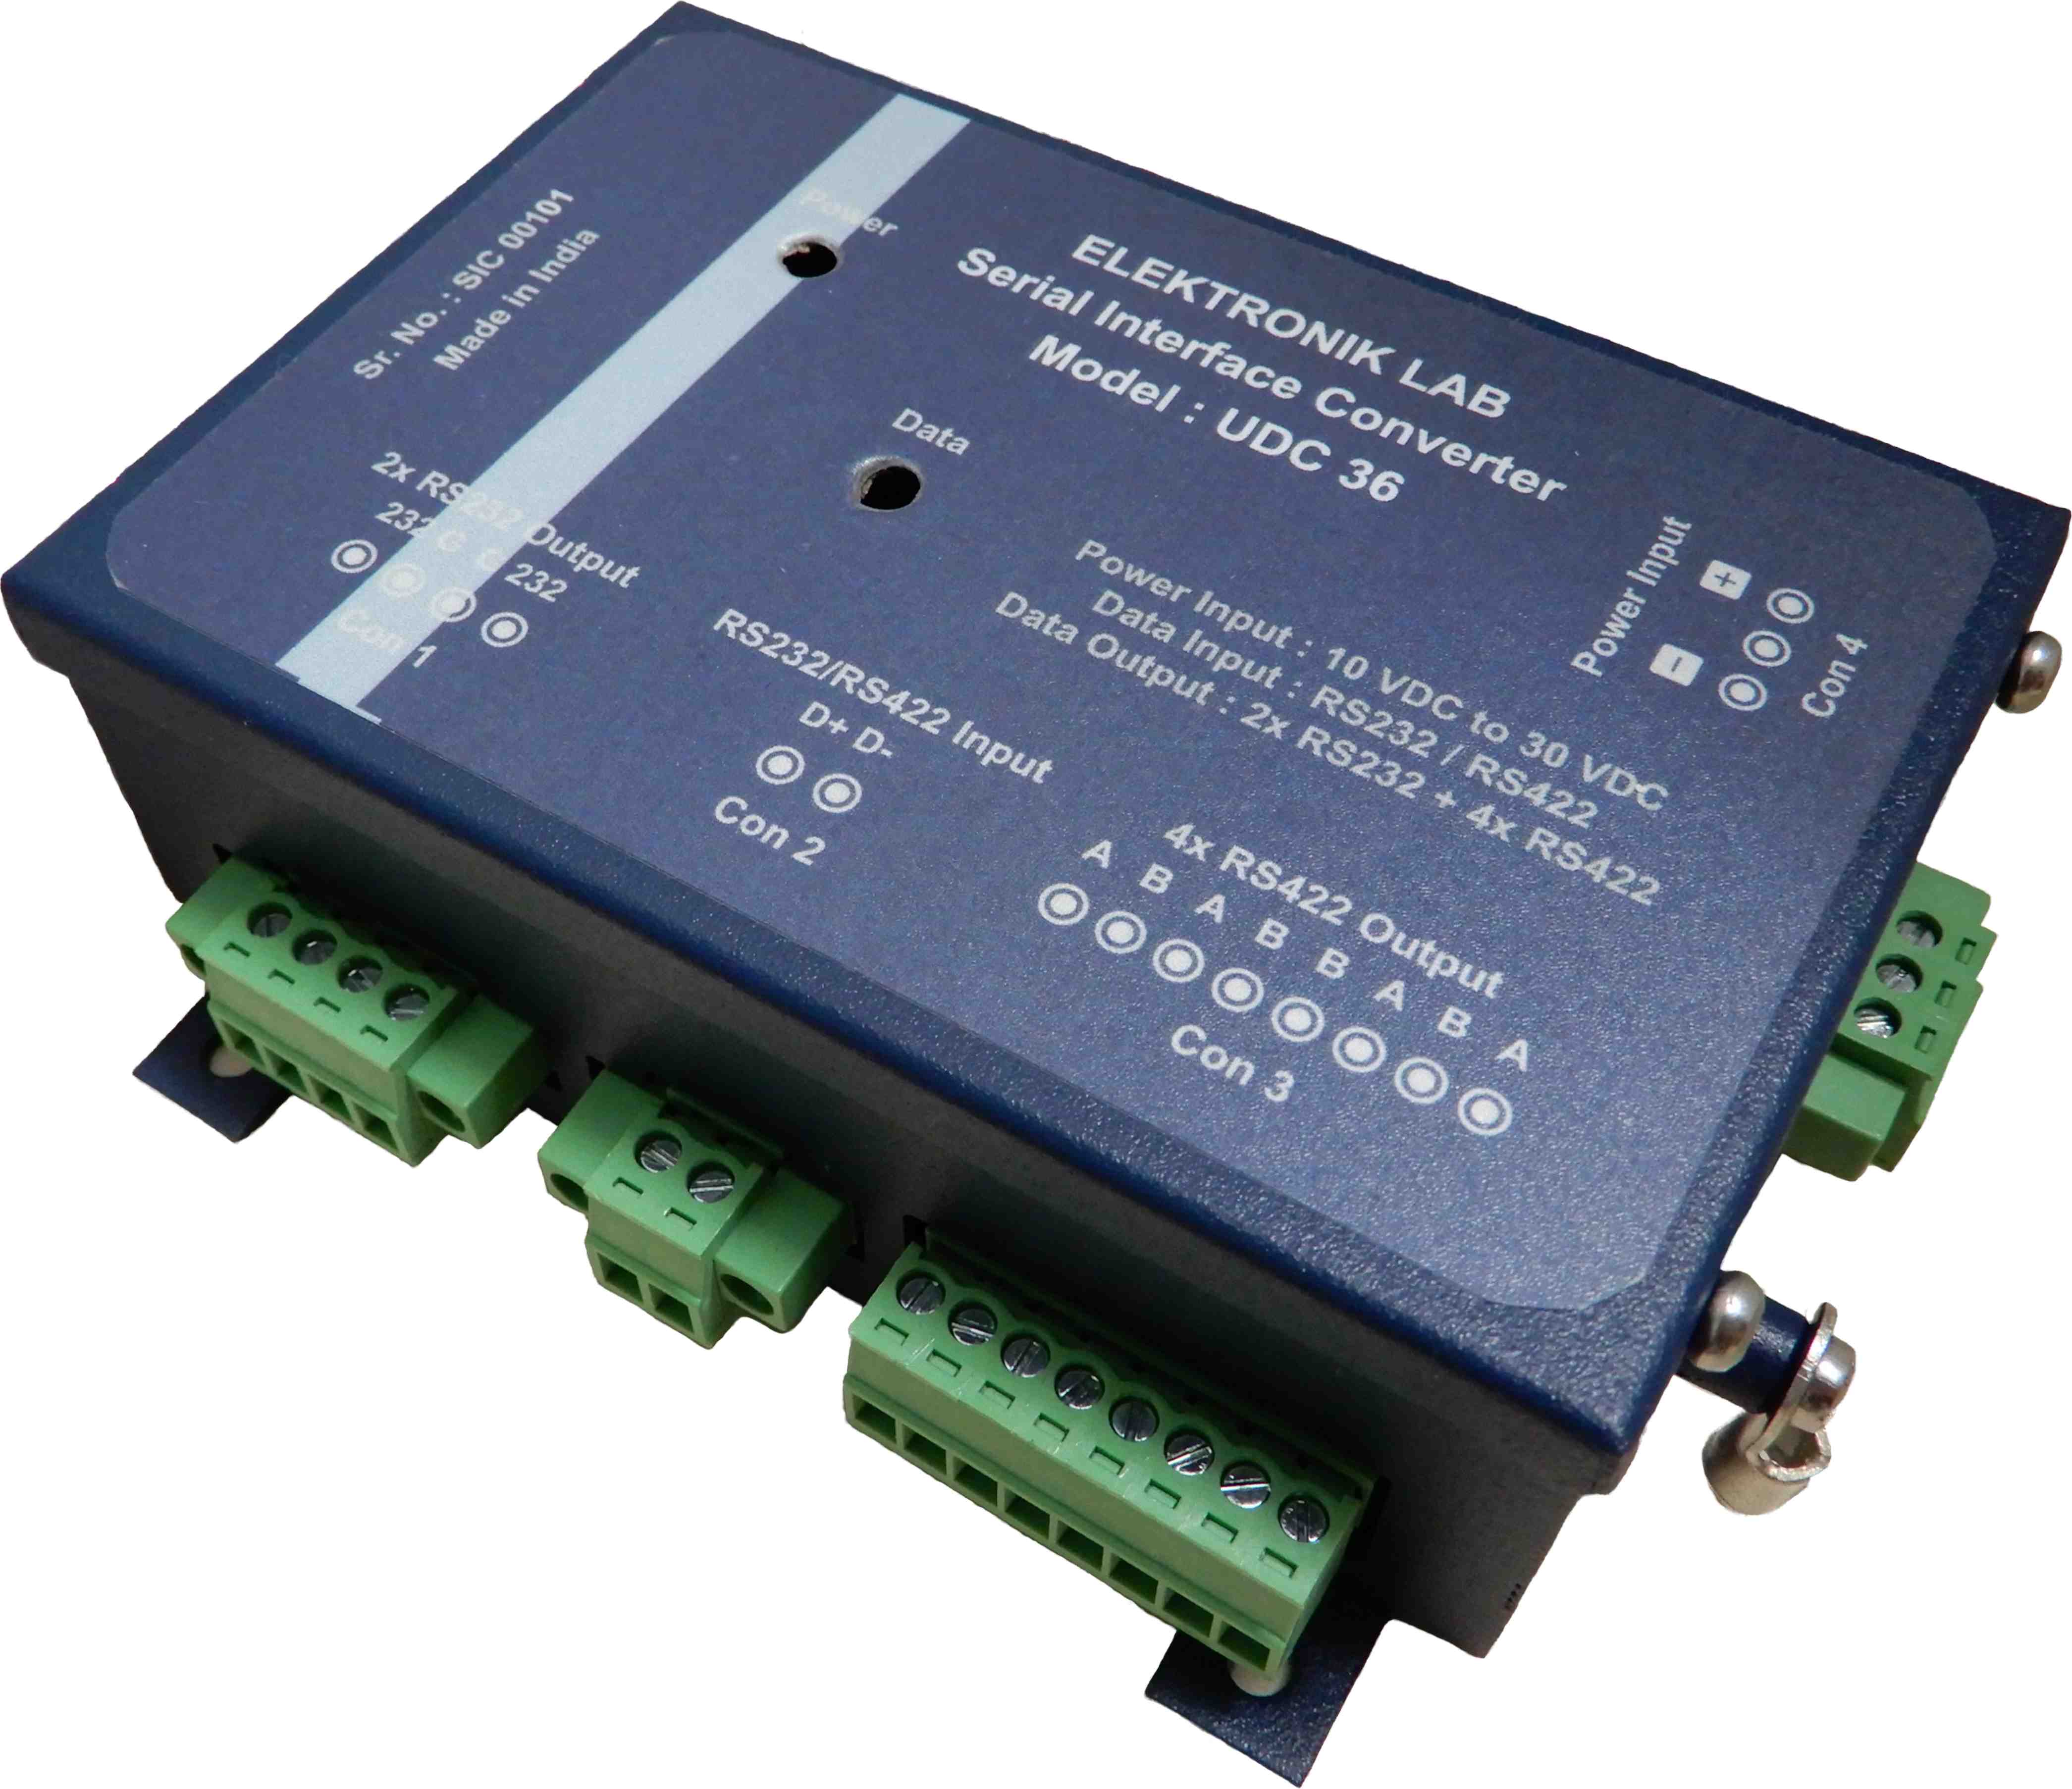 UDC 36 - Serial Interface Converter